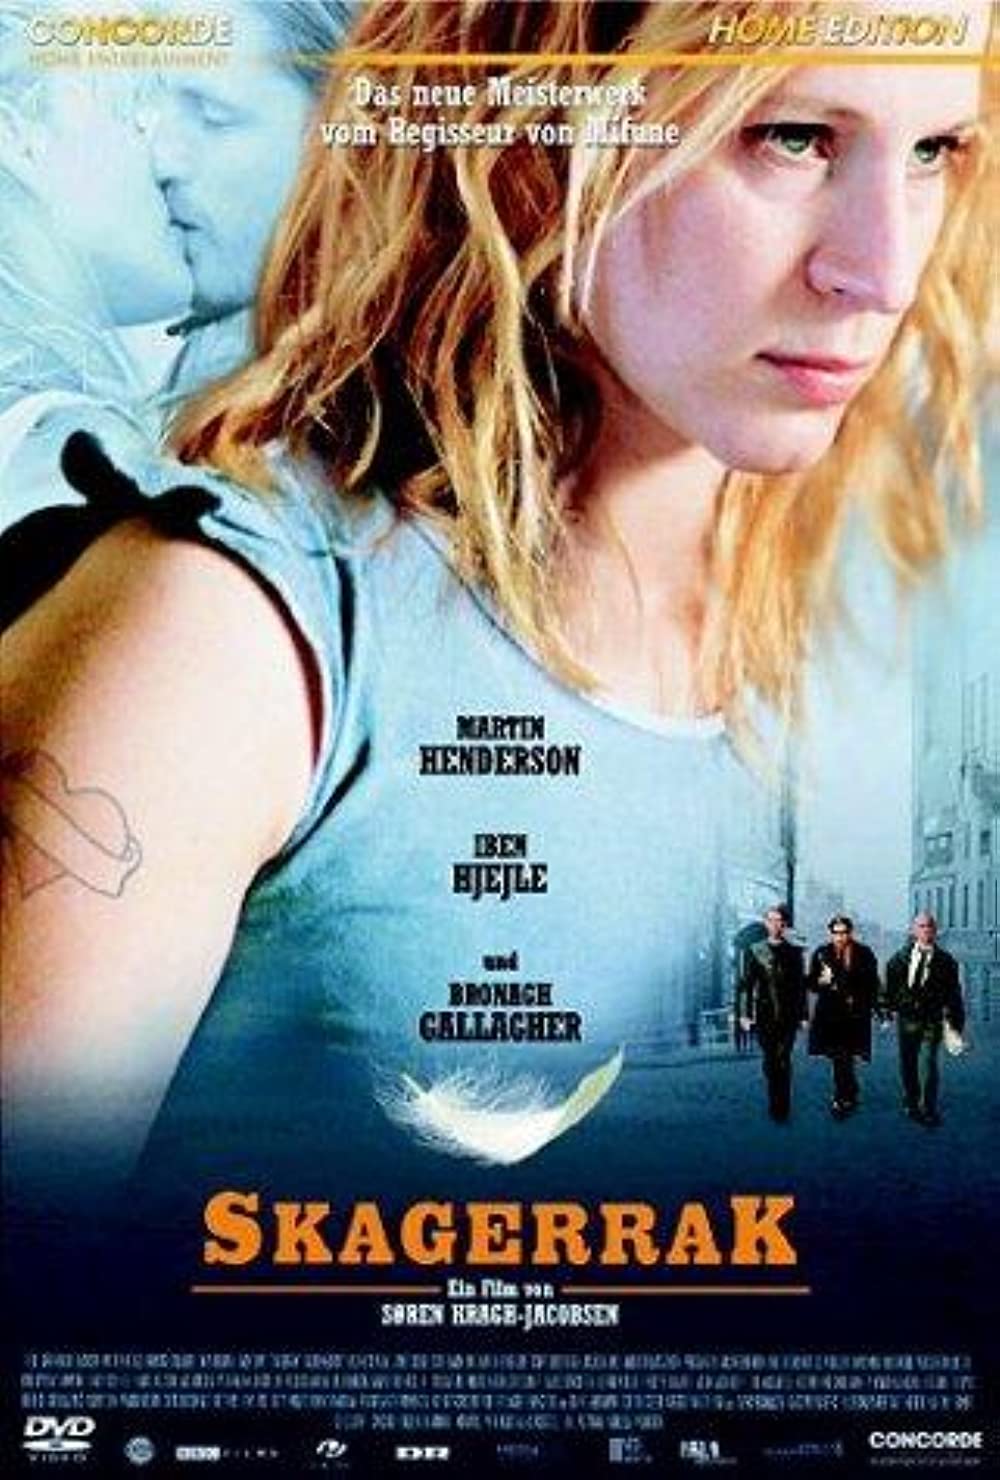 Filmbeschreibung zu Skagerrak